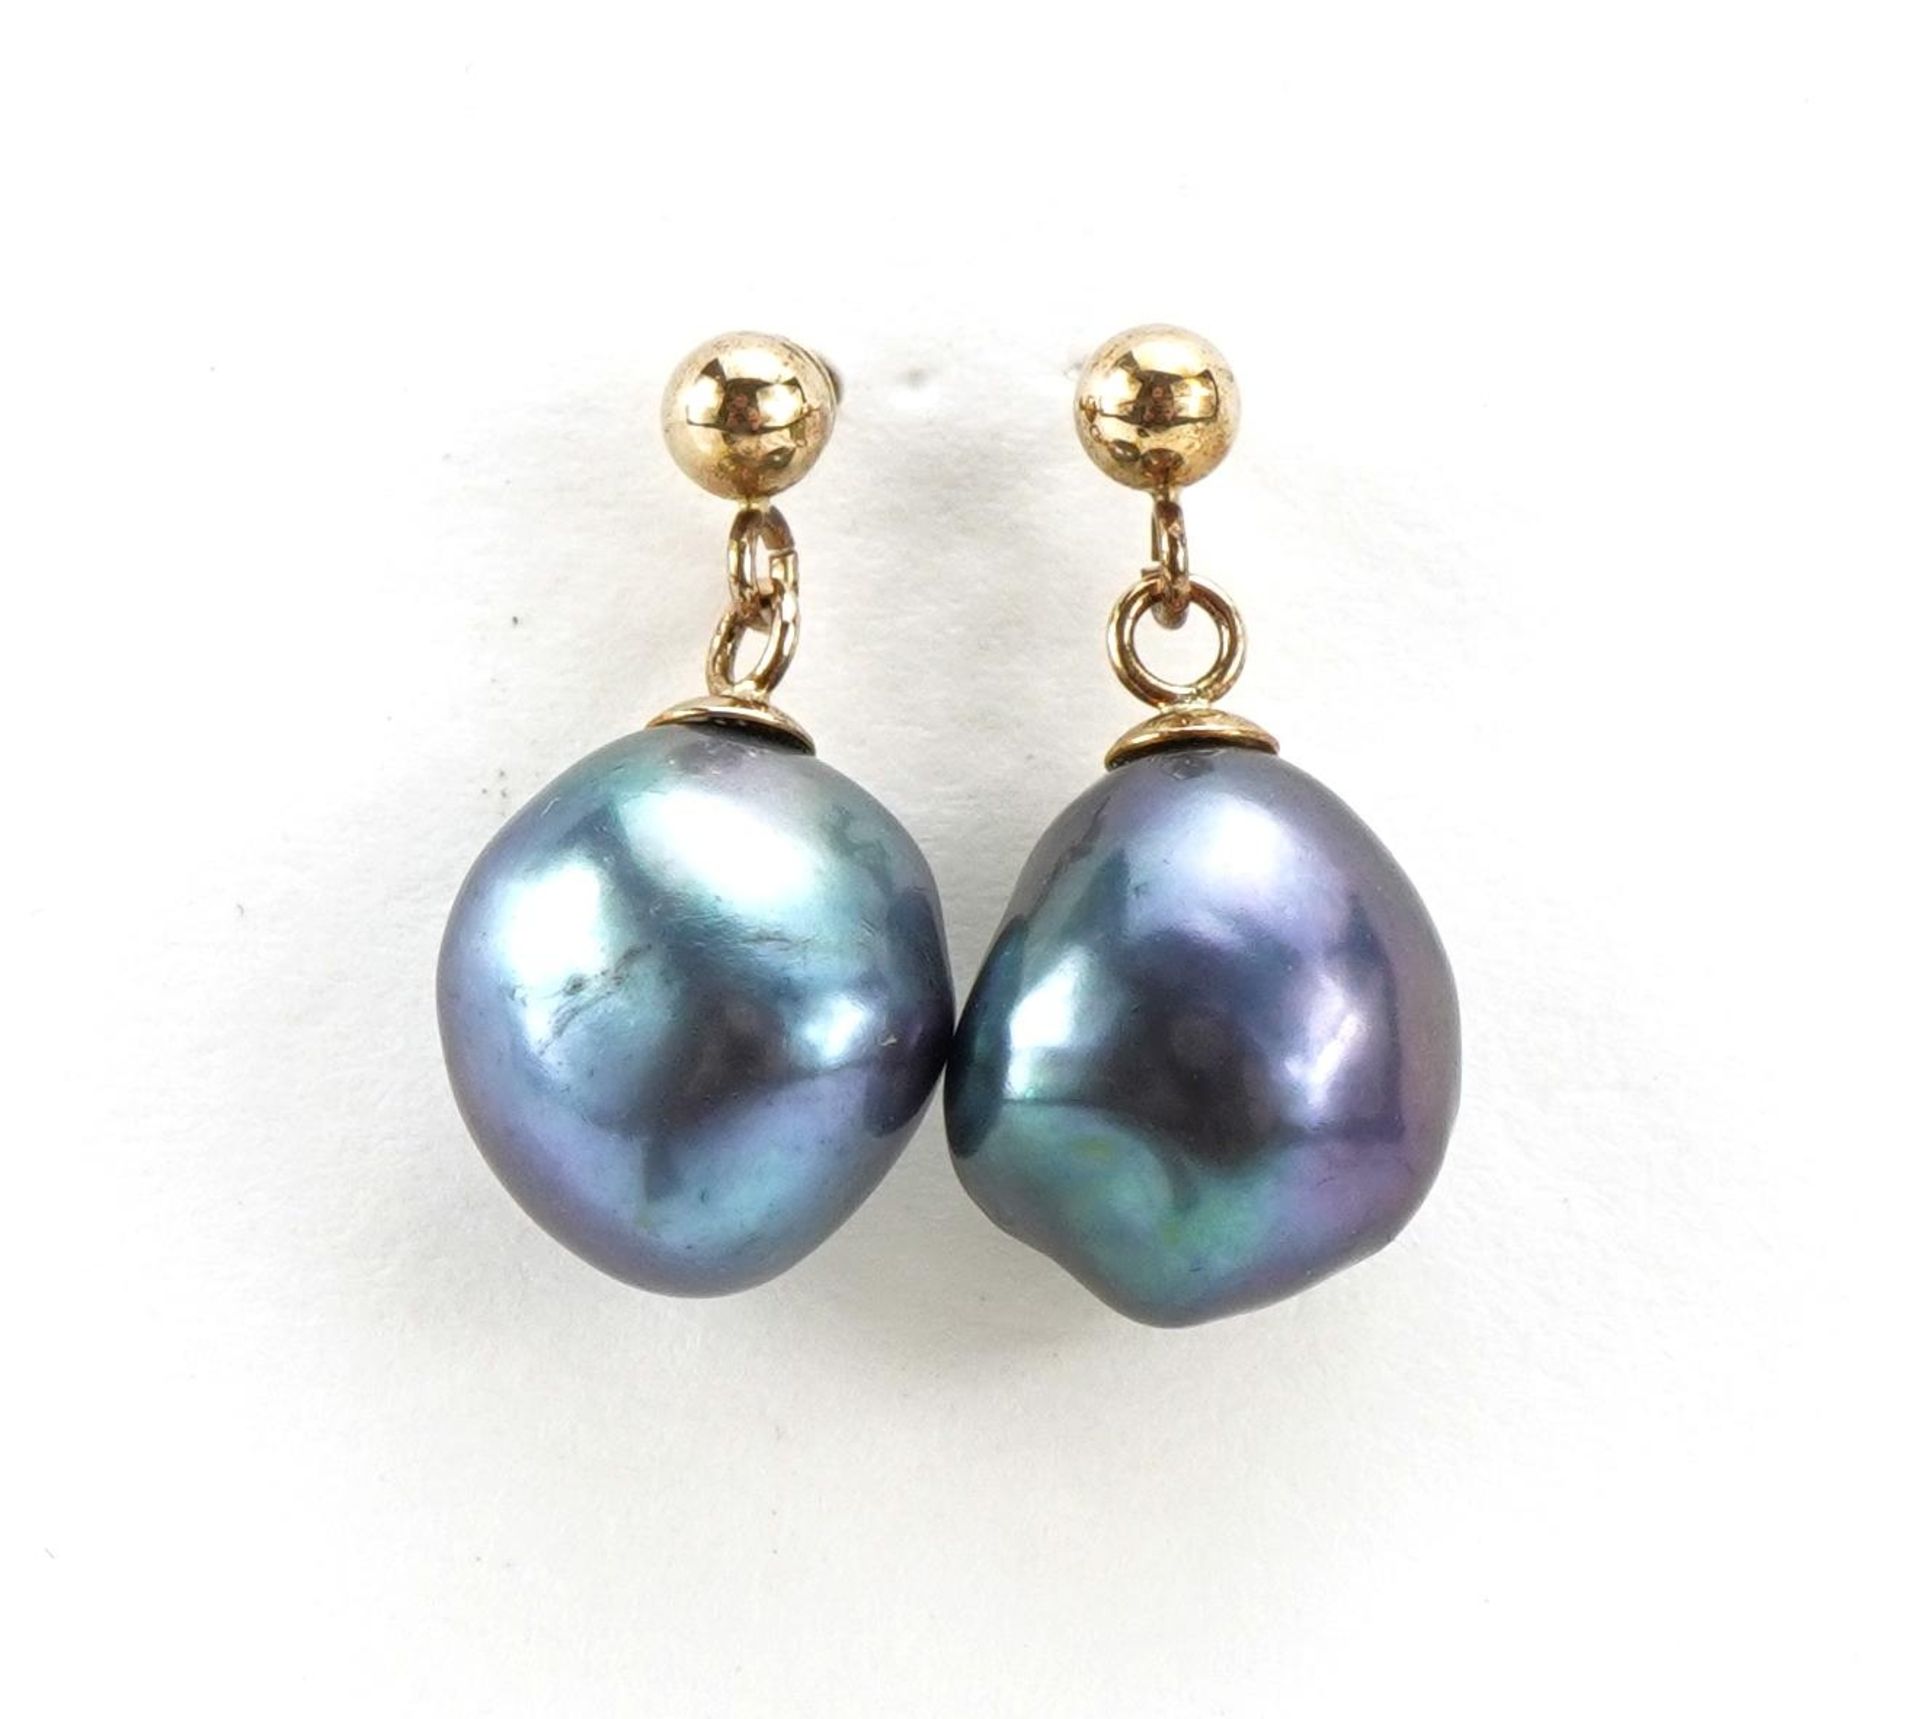 Pair of 9ct gold freshwater pearl drop earrings, 1.7cm high, 2.2g